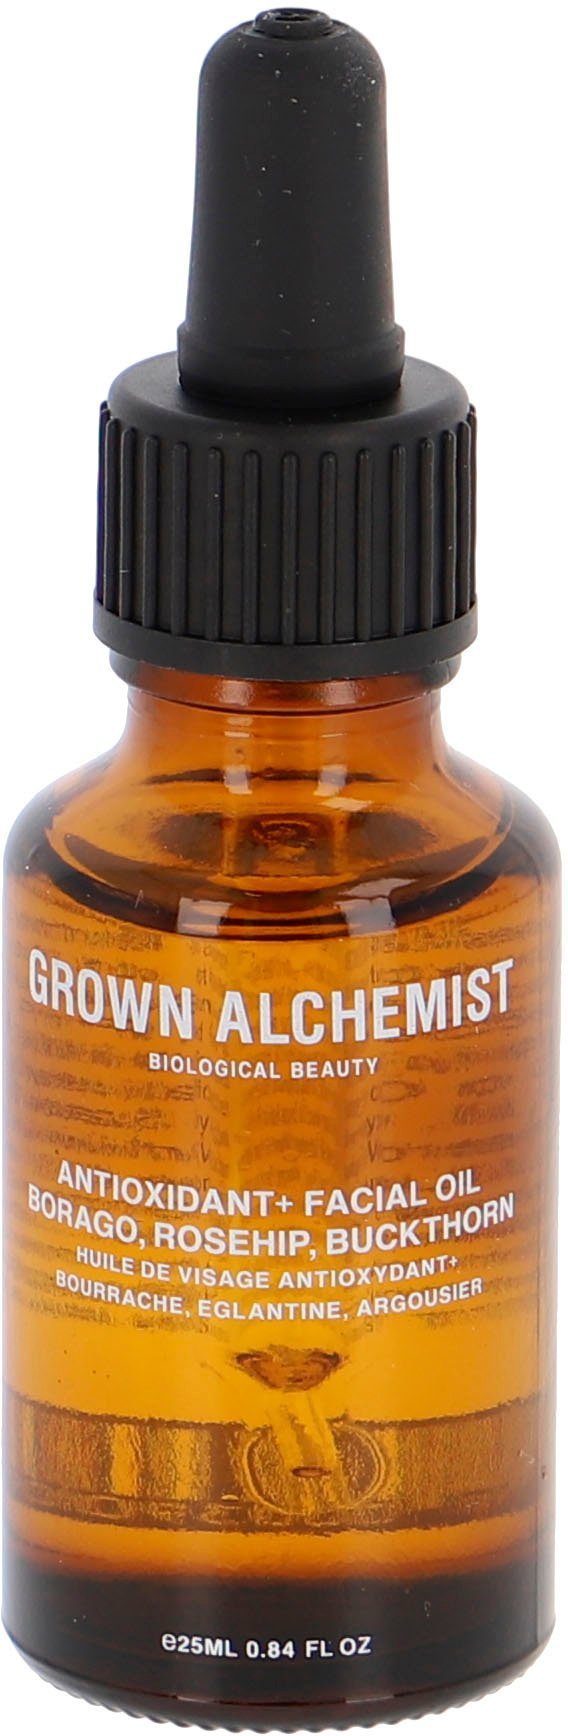 Top-Verkaufstipp GROWN ALCHEMIST Gesichtsöl Anti-Oxidant+ Rosehip, Borago, Oil, Buckthorn Facial